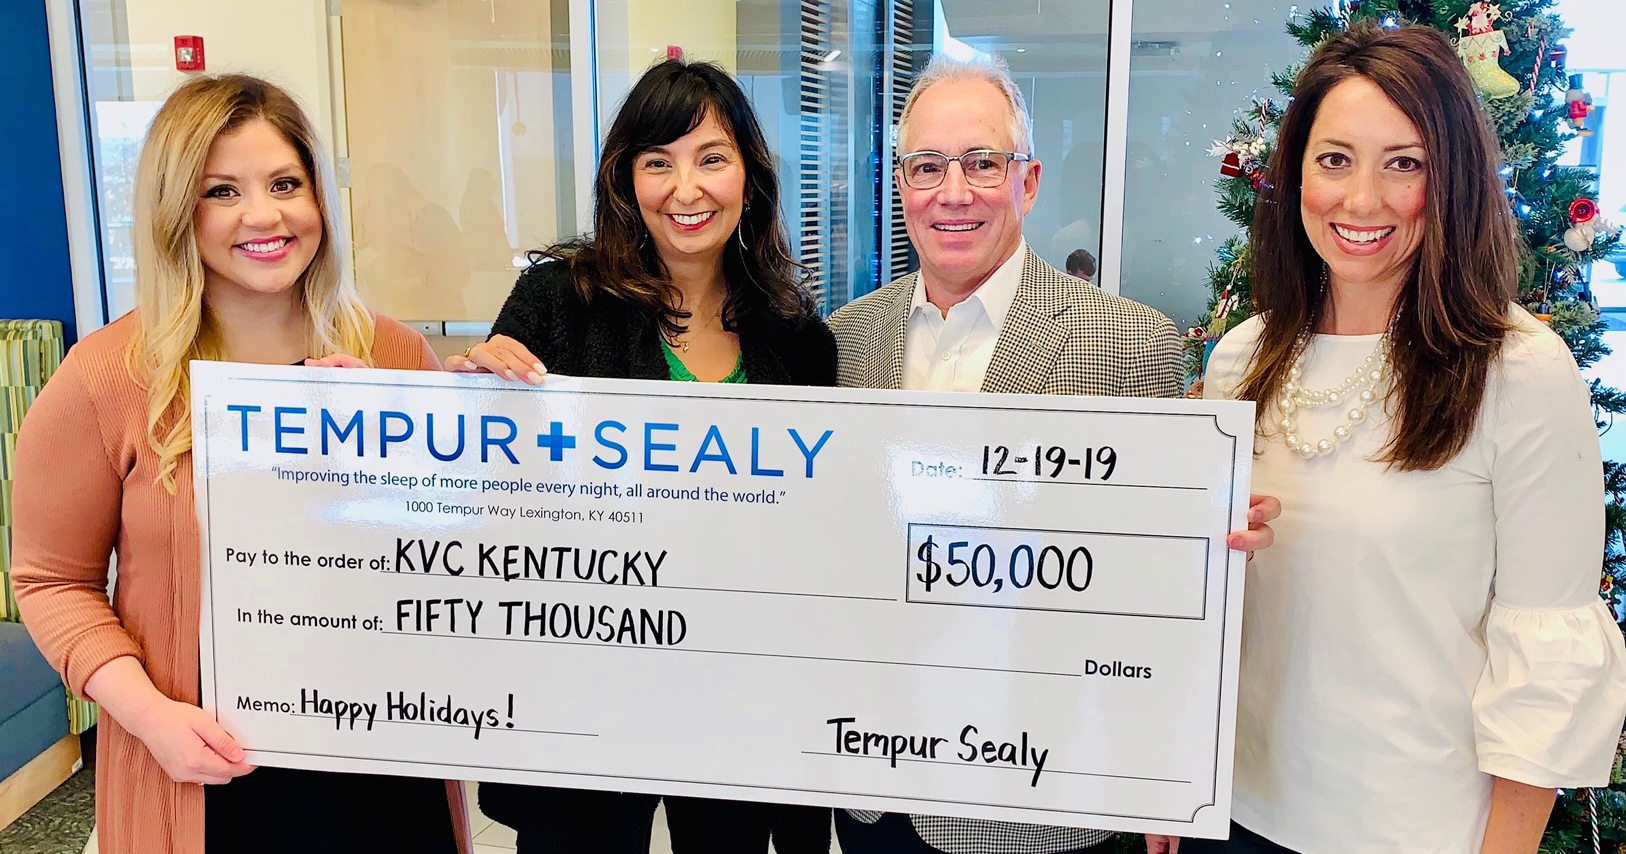 Tempur Sealy helps children and families in crisis through nonprofit KVC Kentucky